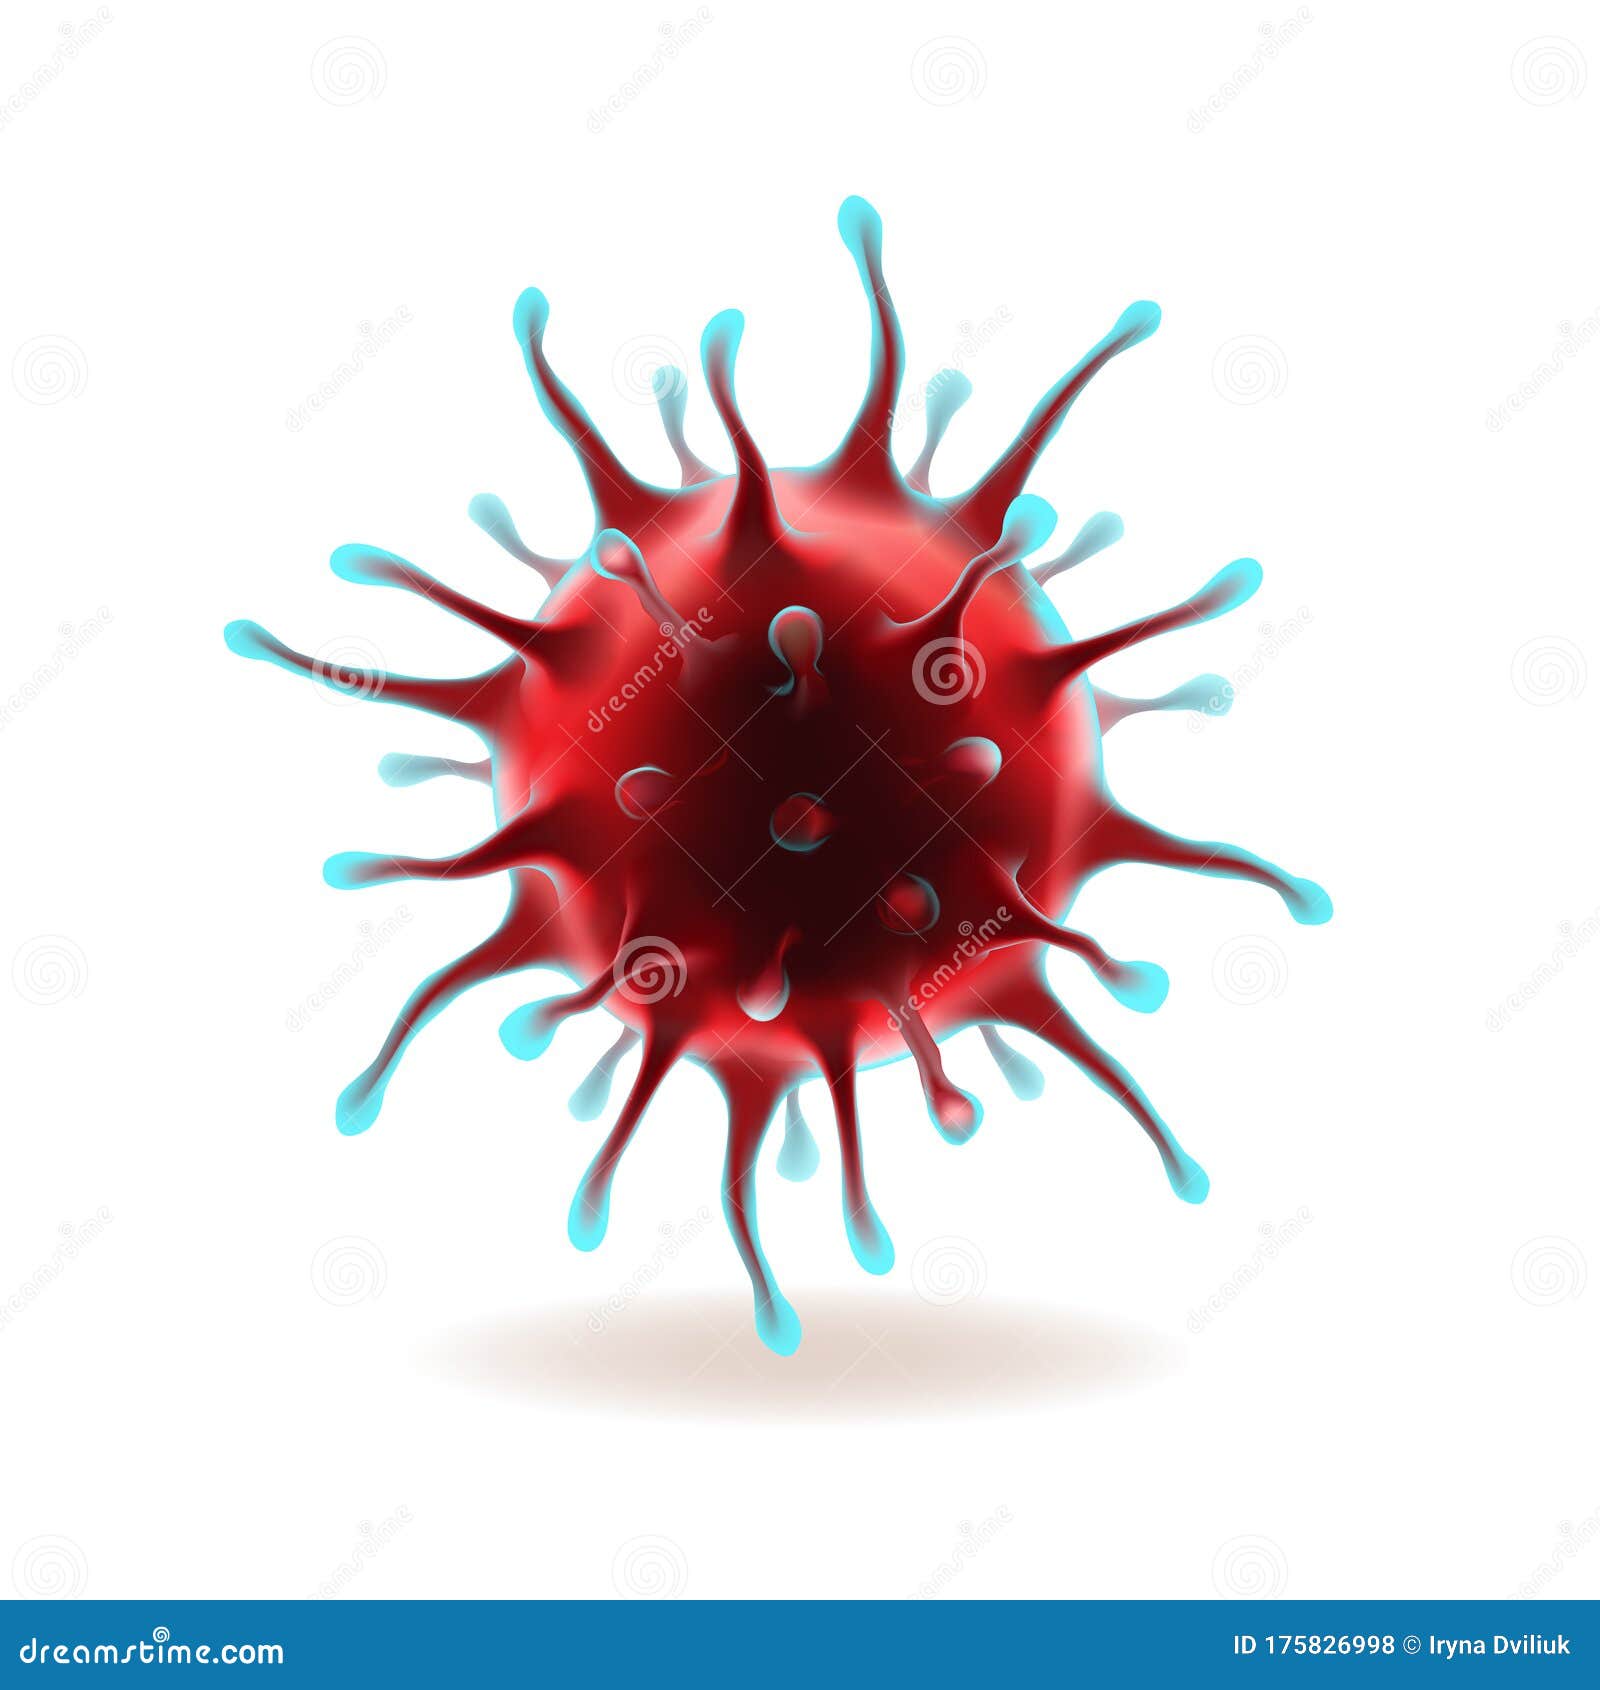 coronavirus epidemia  human virus  